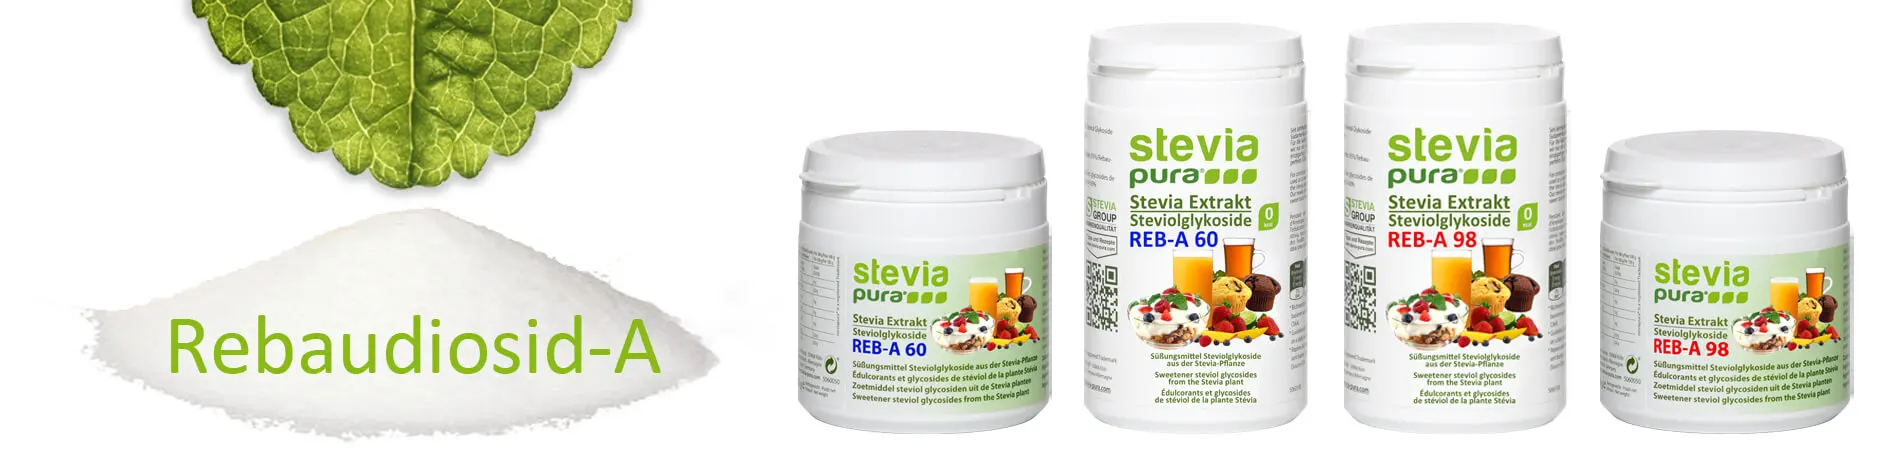 Rebaudiosid-A: Reines pures Stevia Pulver Steviolglykoside